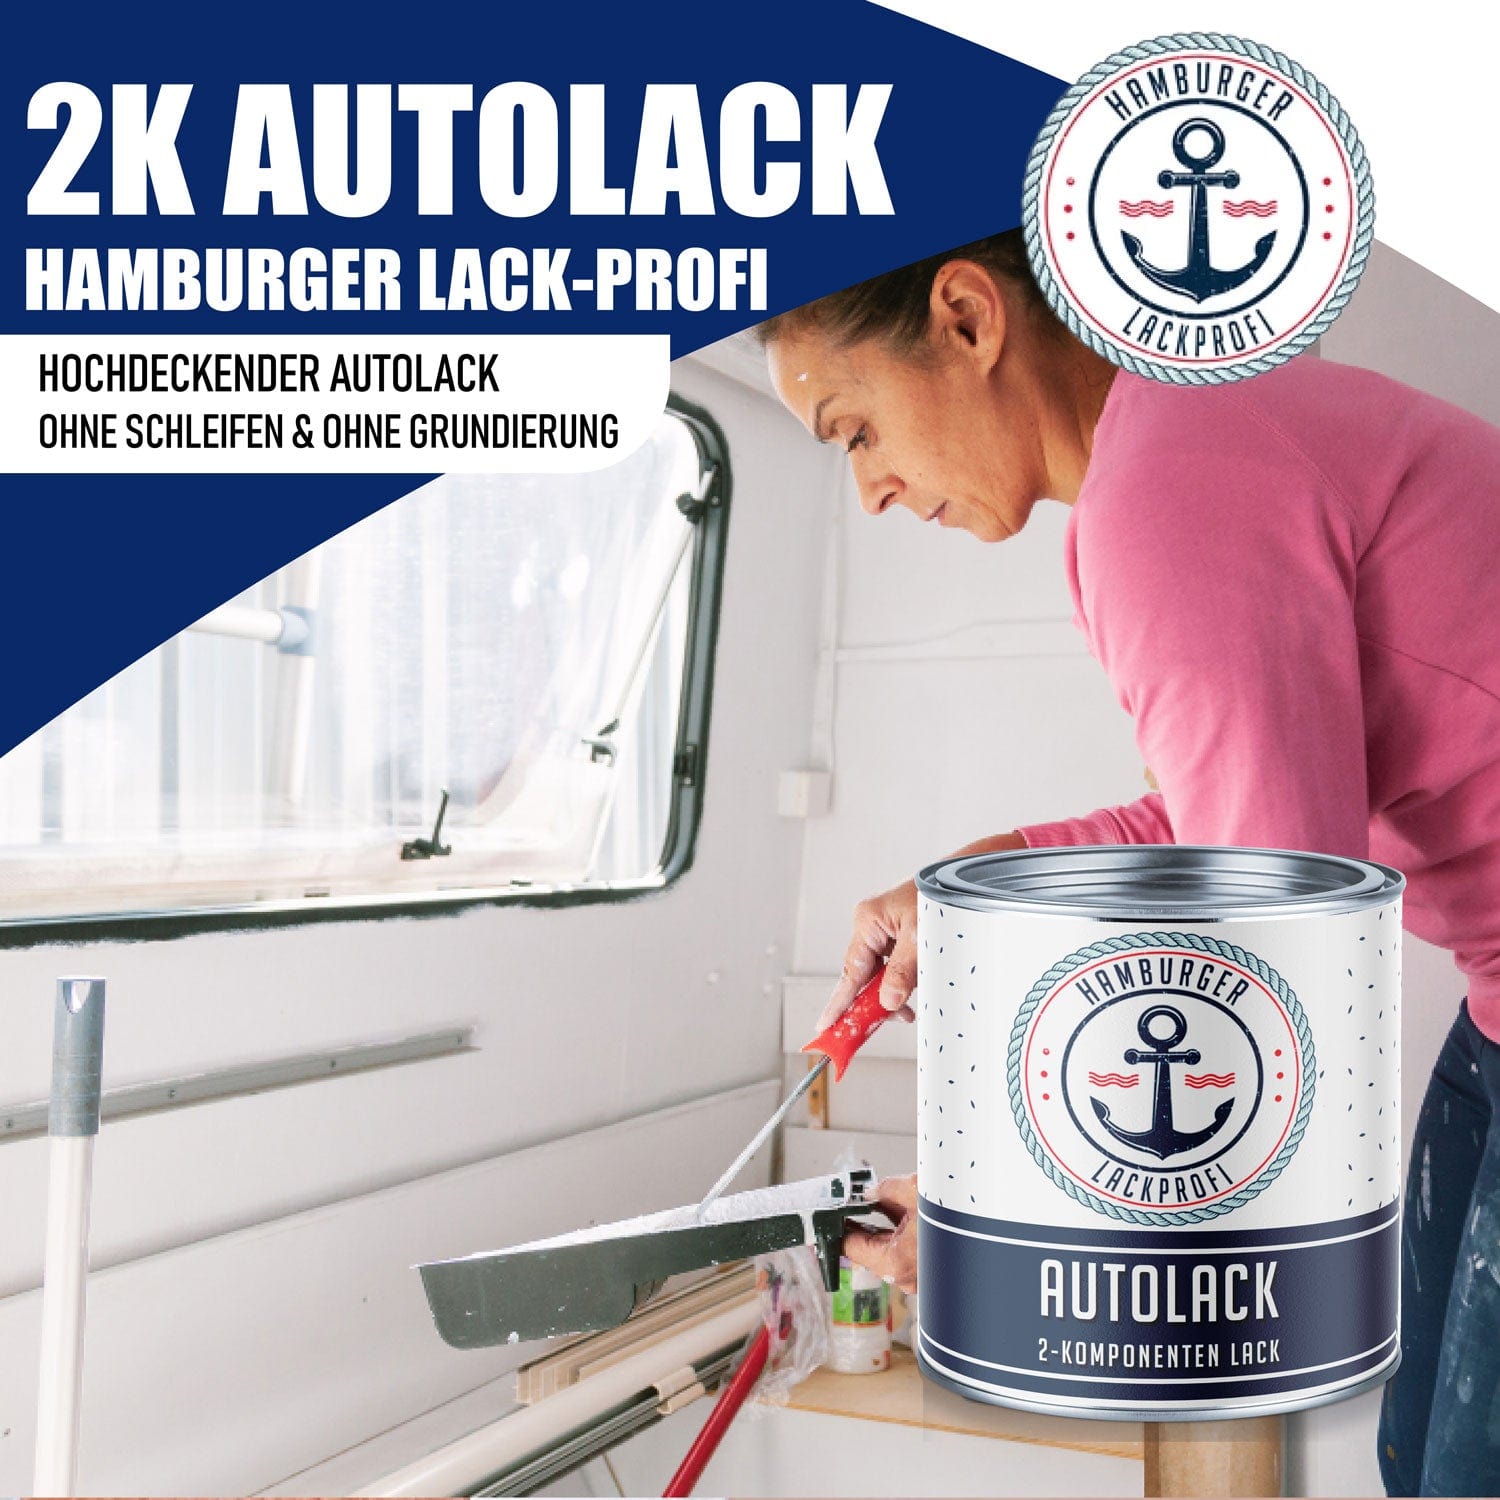 Hamburger Lack-Profi Lacke & Beschichtungen Hamburger Lack-Profi 2K Autolack in Blaßbraun RAL 8025 mit Lackierset (X300) & Verdünnung (1 L) - 30% Sparangebot